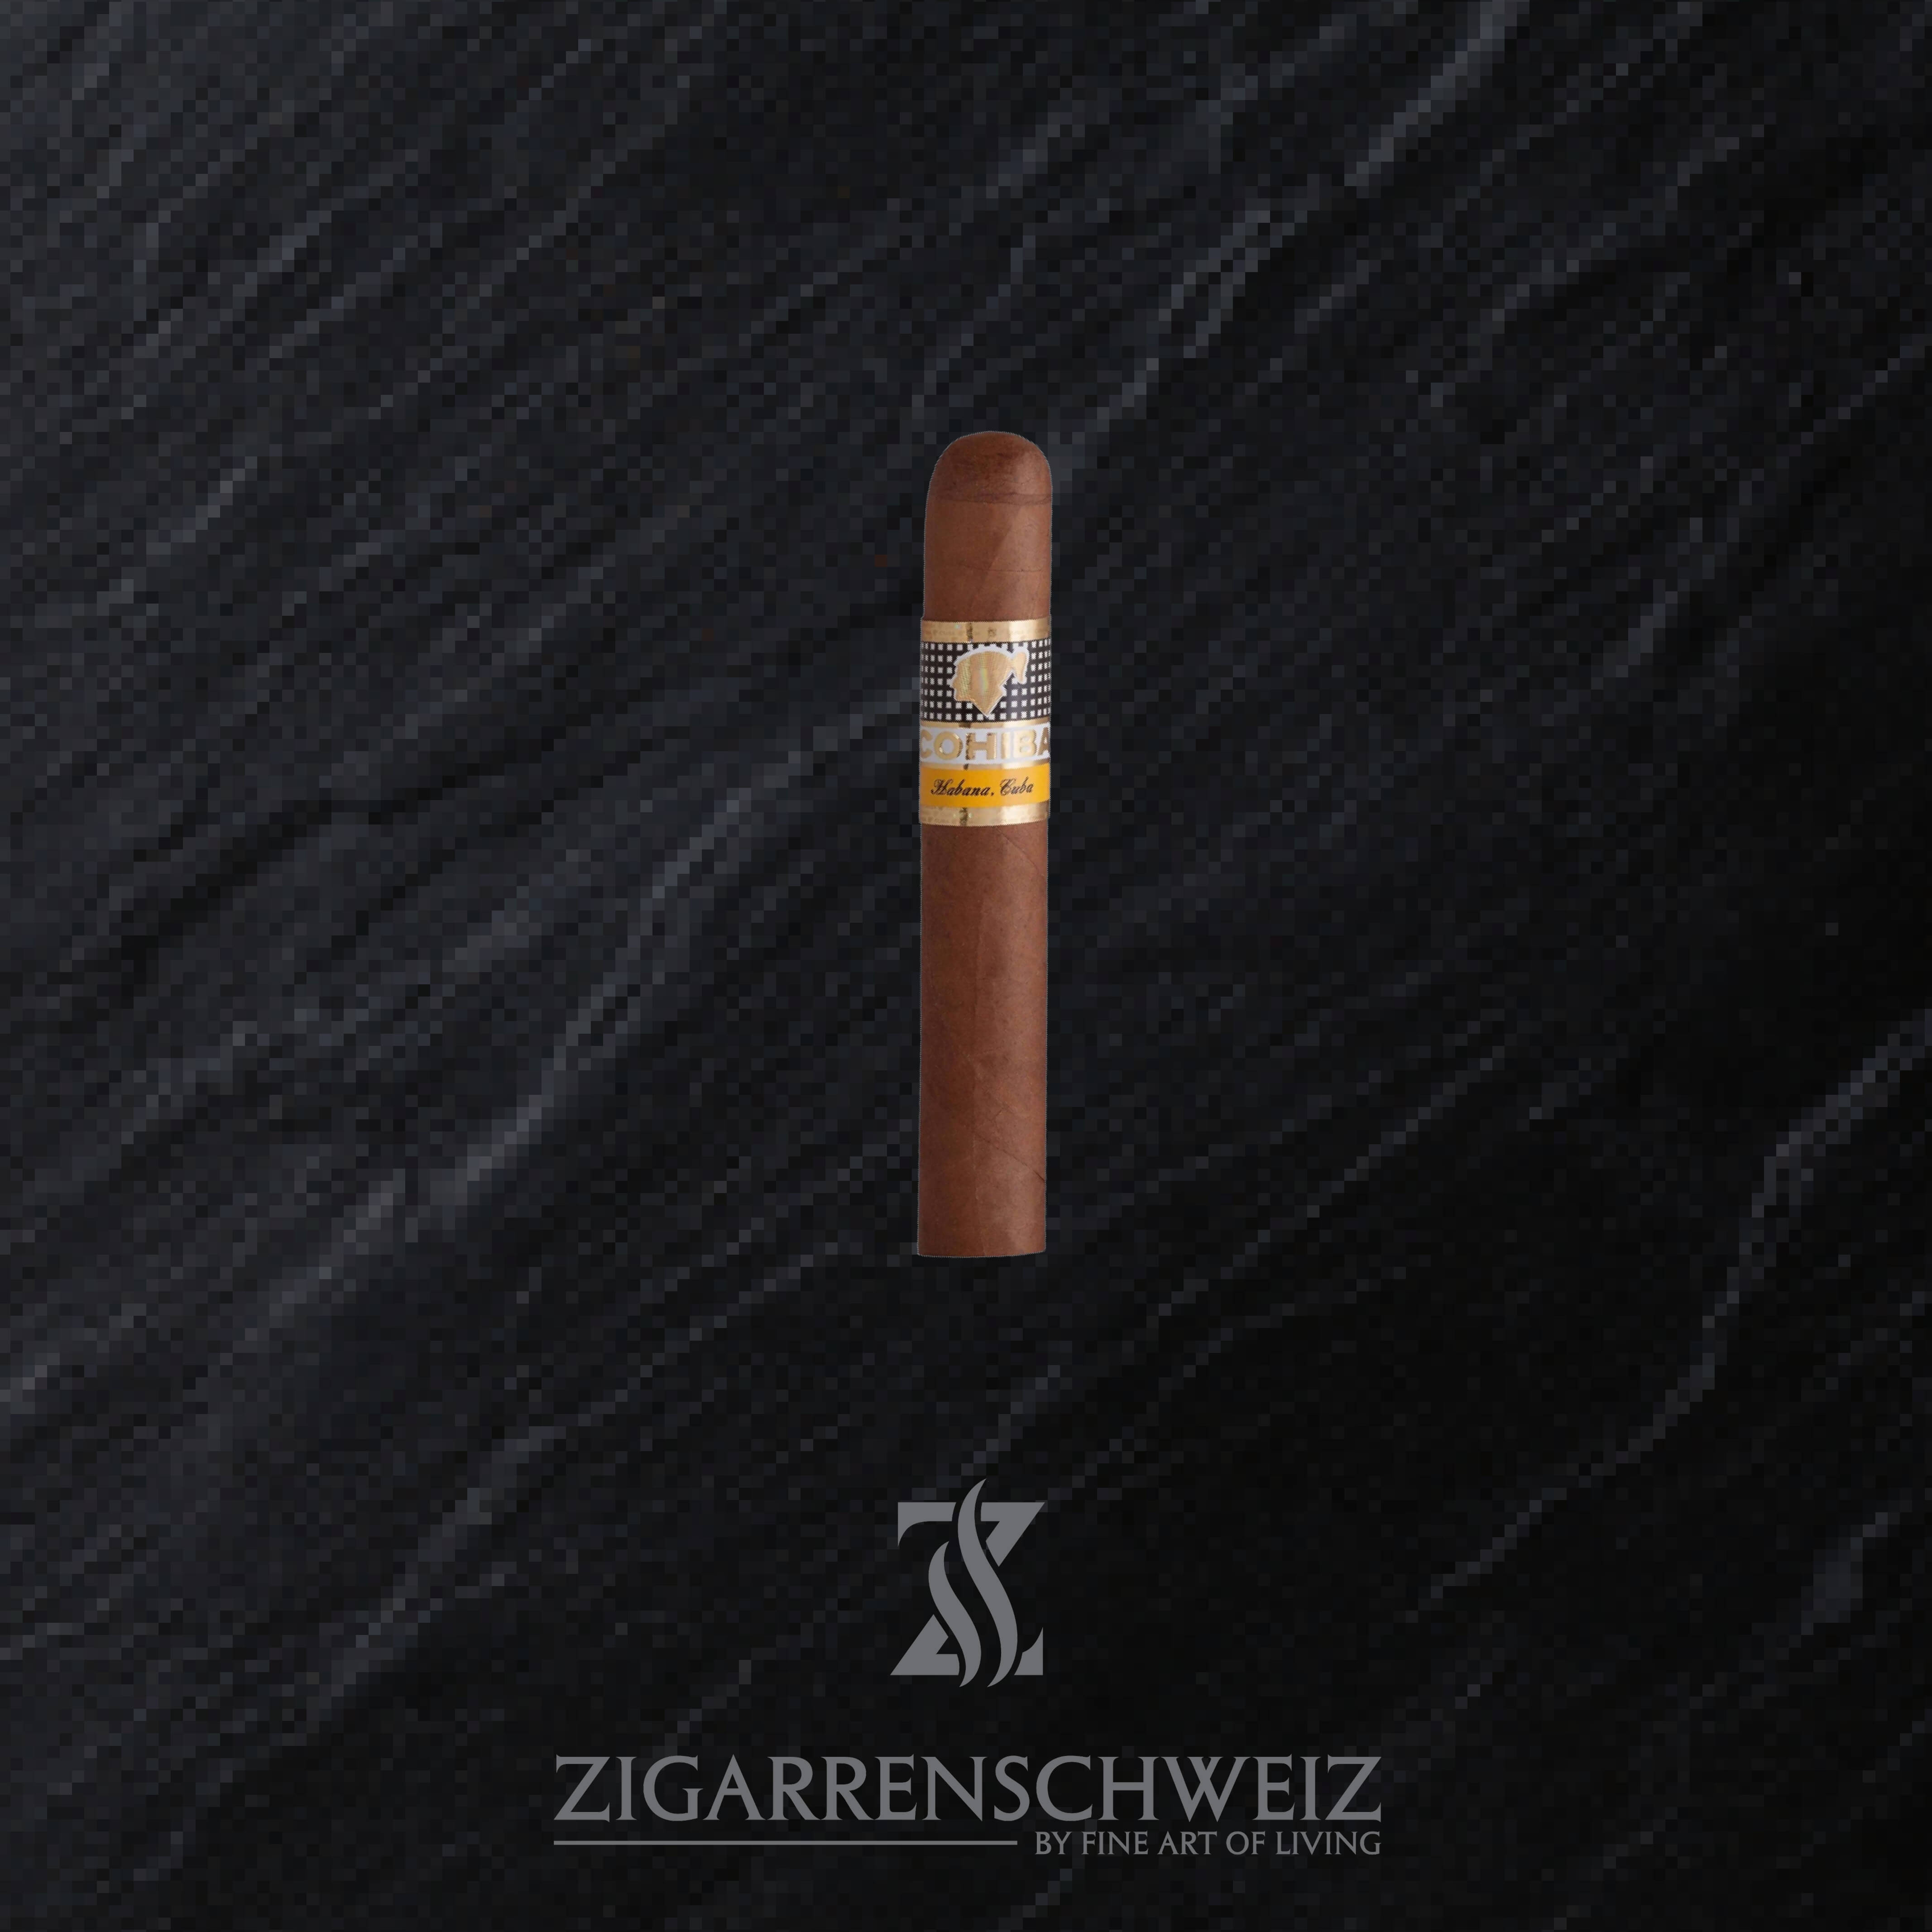 Cohiba Siglo I (1) Zigarre aus der Linea 1492 von Cohiba